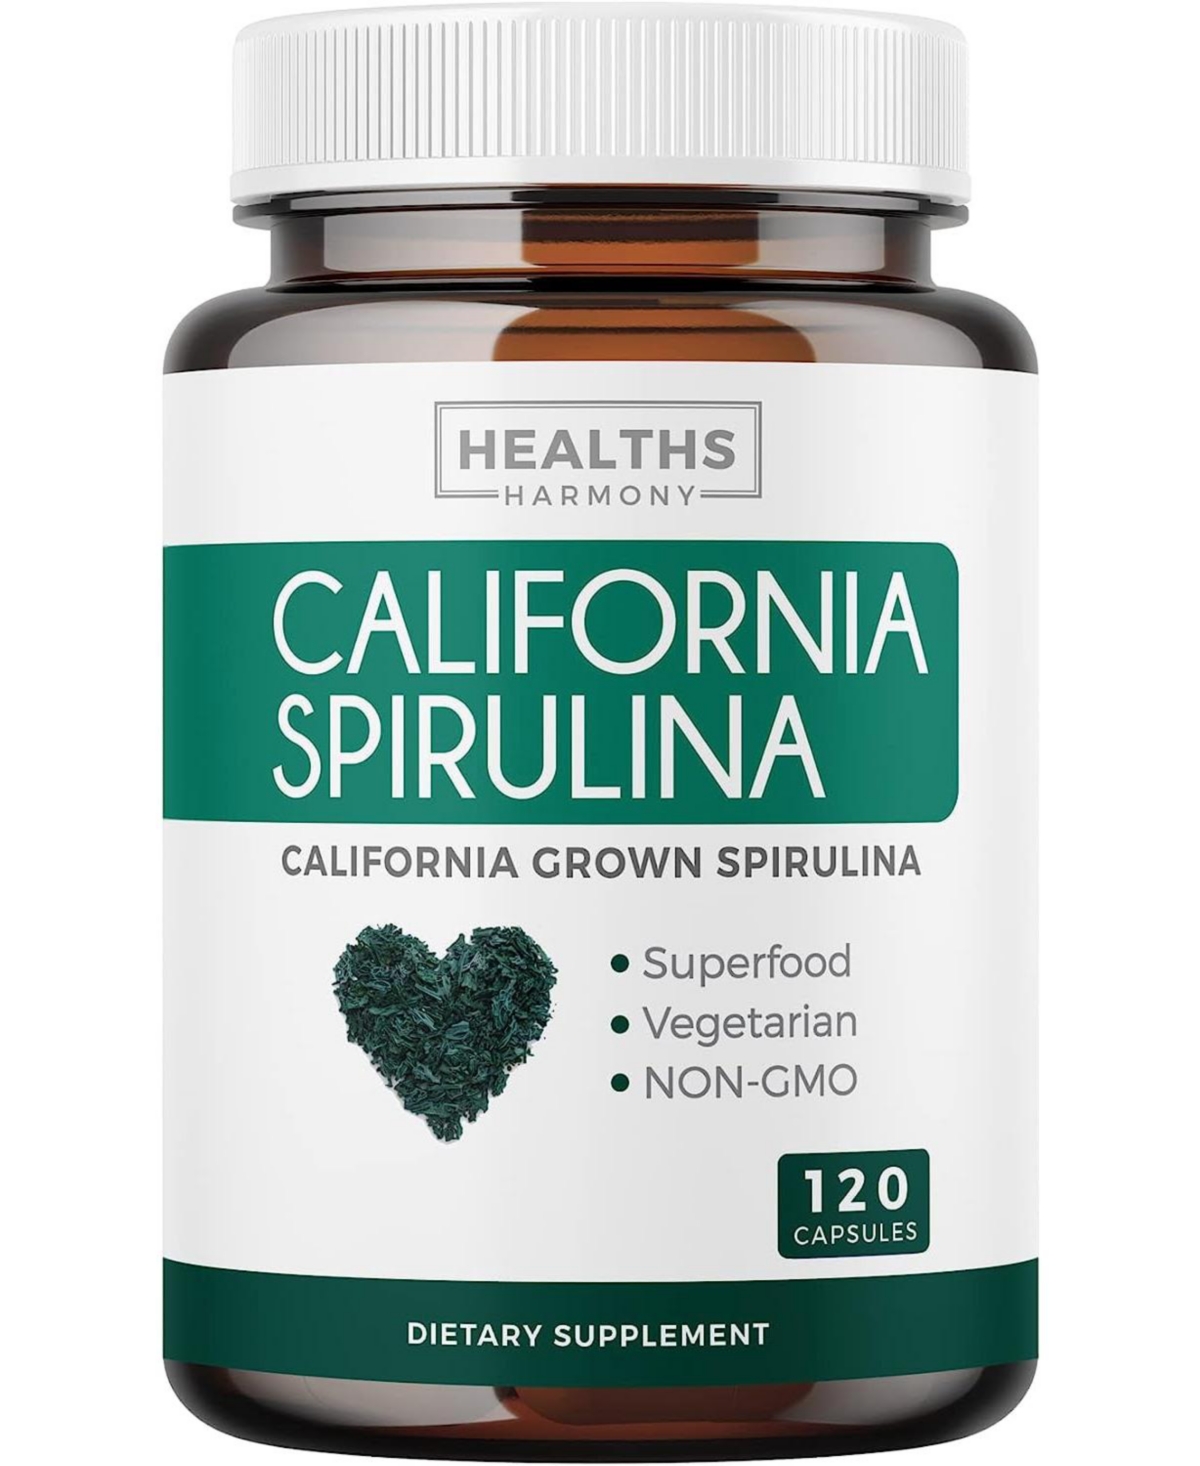 California Spirulina Capsules (Non-gmo) 120 Vegetarian Capsules 500mg - Blue Green Algae Superfood from Spirulina Powder - Grown in California - Glute